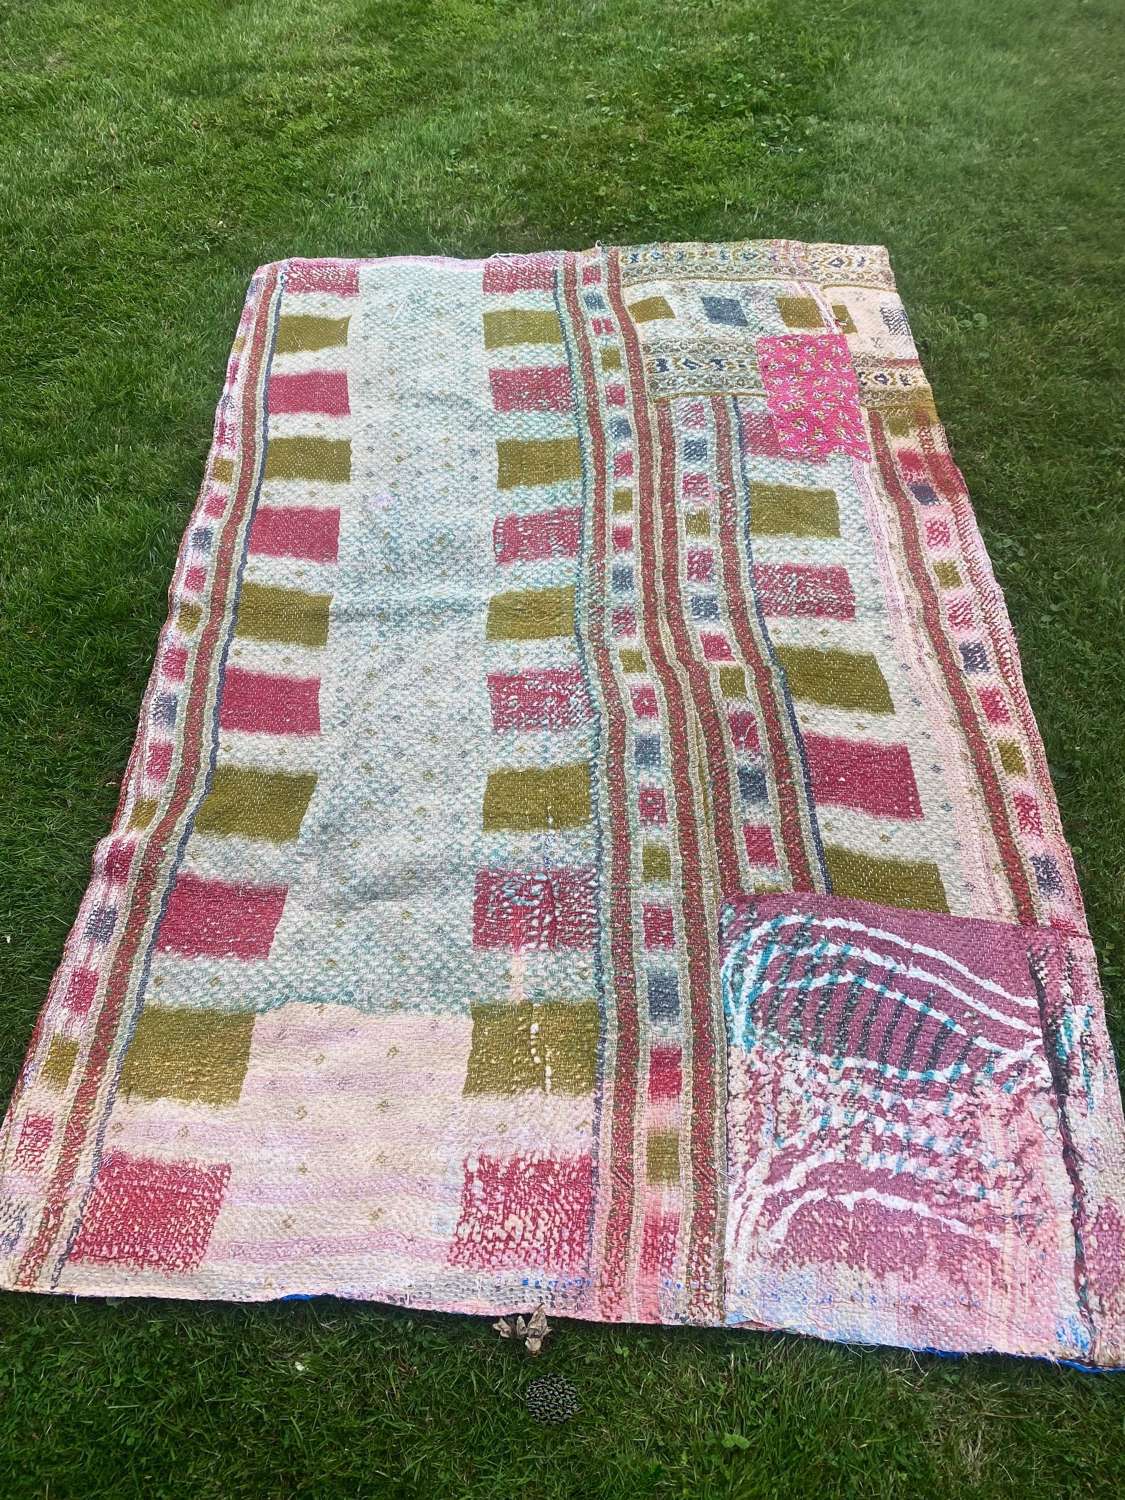 Mid century Indian patchwork quilt